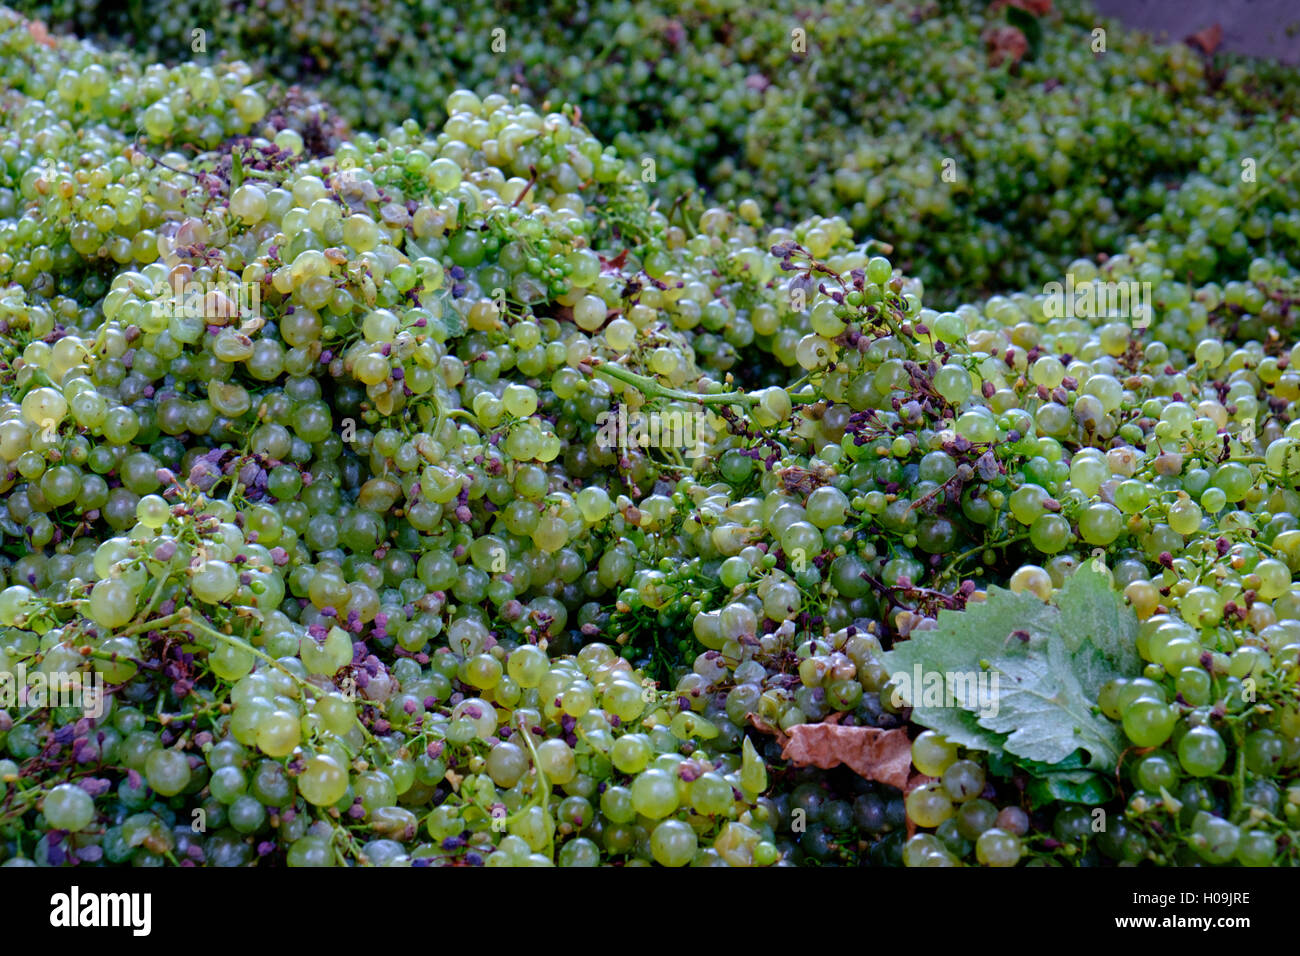 Glera grapes ready for prosecco wine production Stock Photo